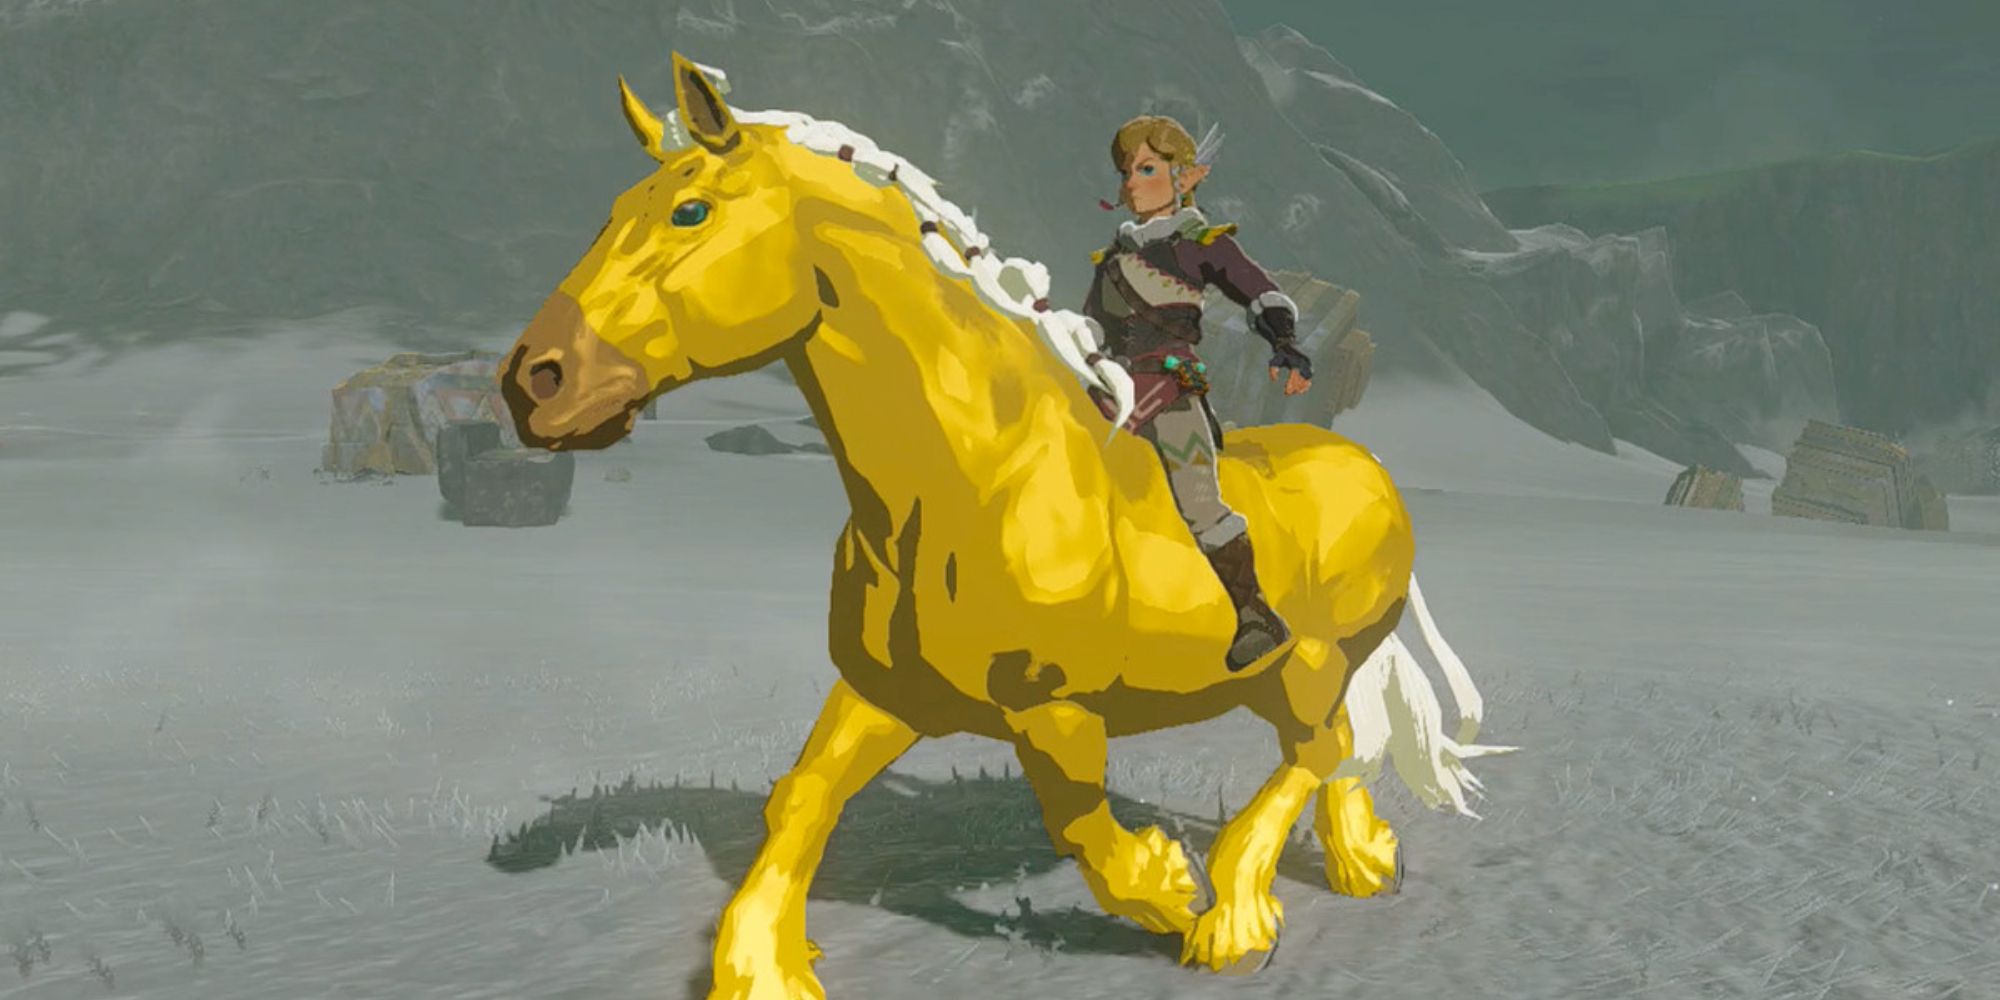 Link riding Zelda's golden horse